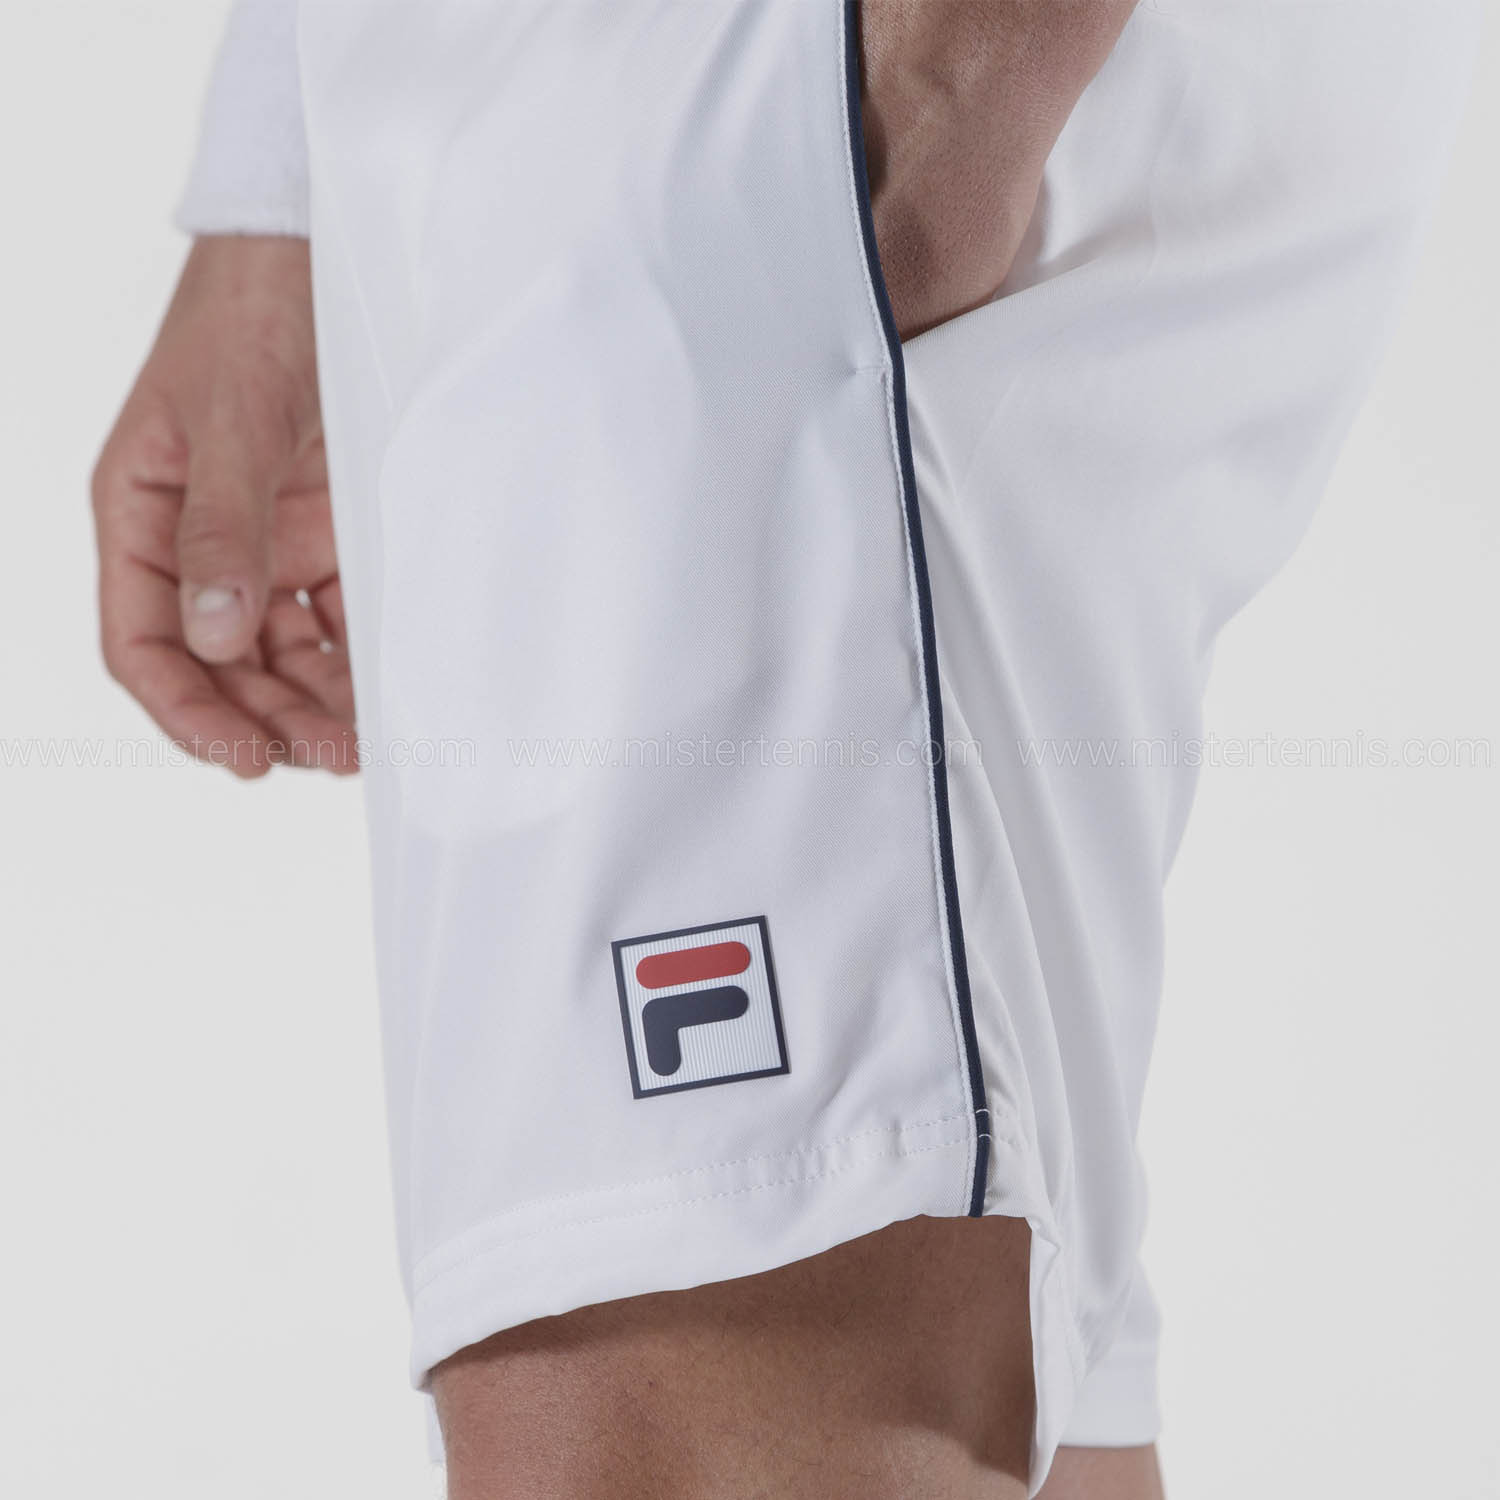 Fila Leon 7in Shorts - White